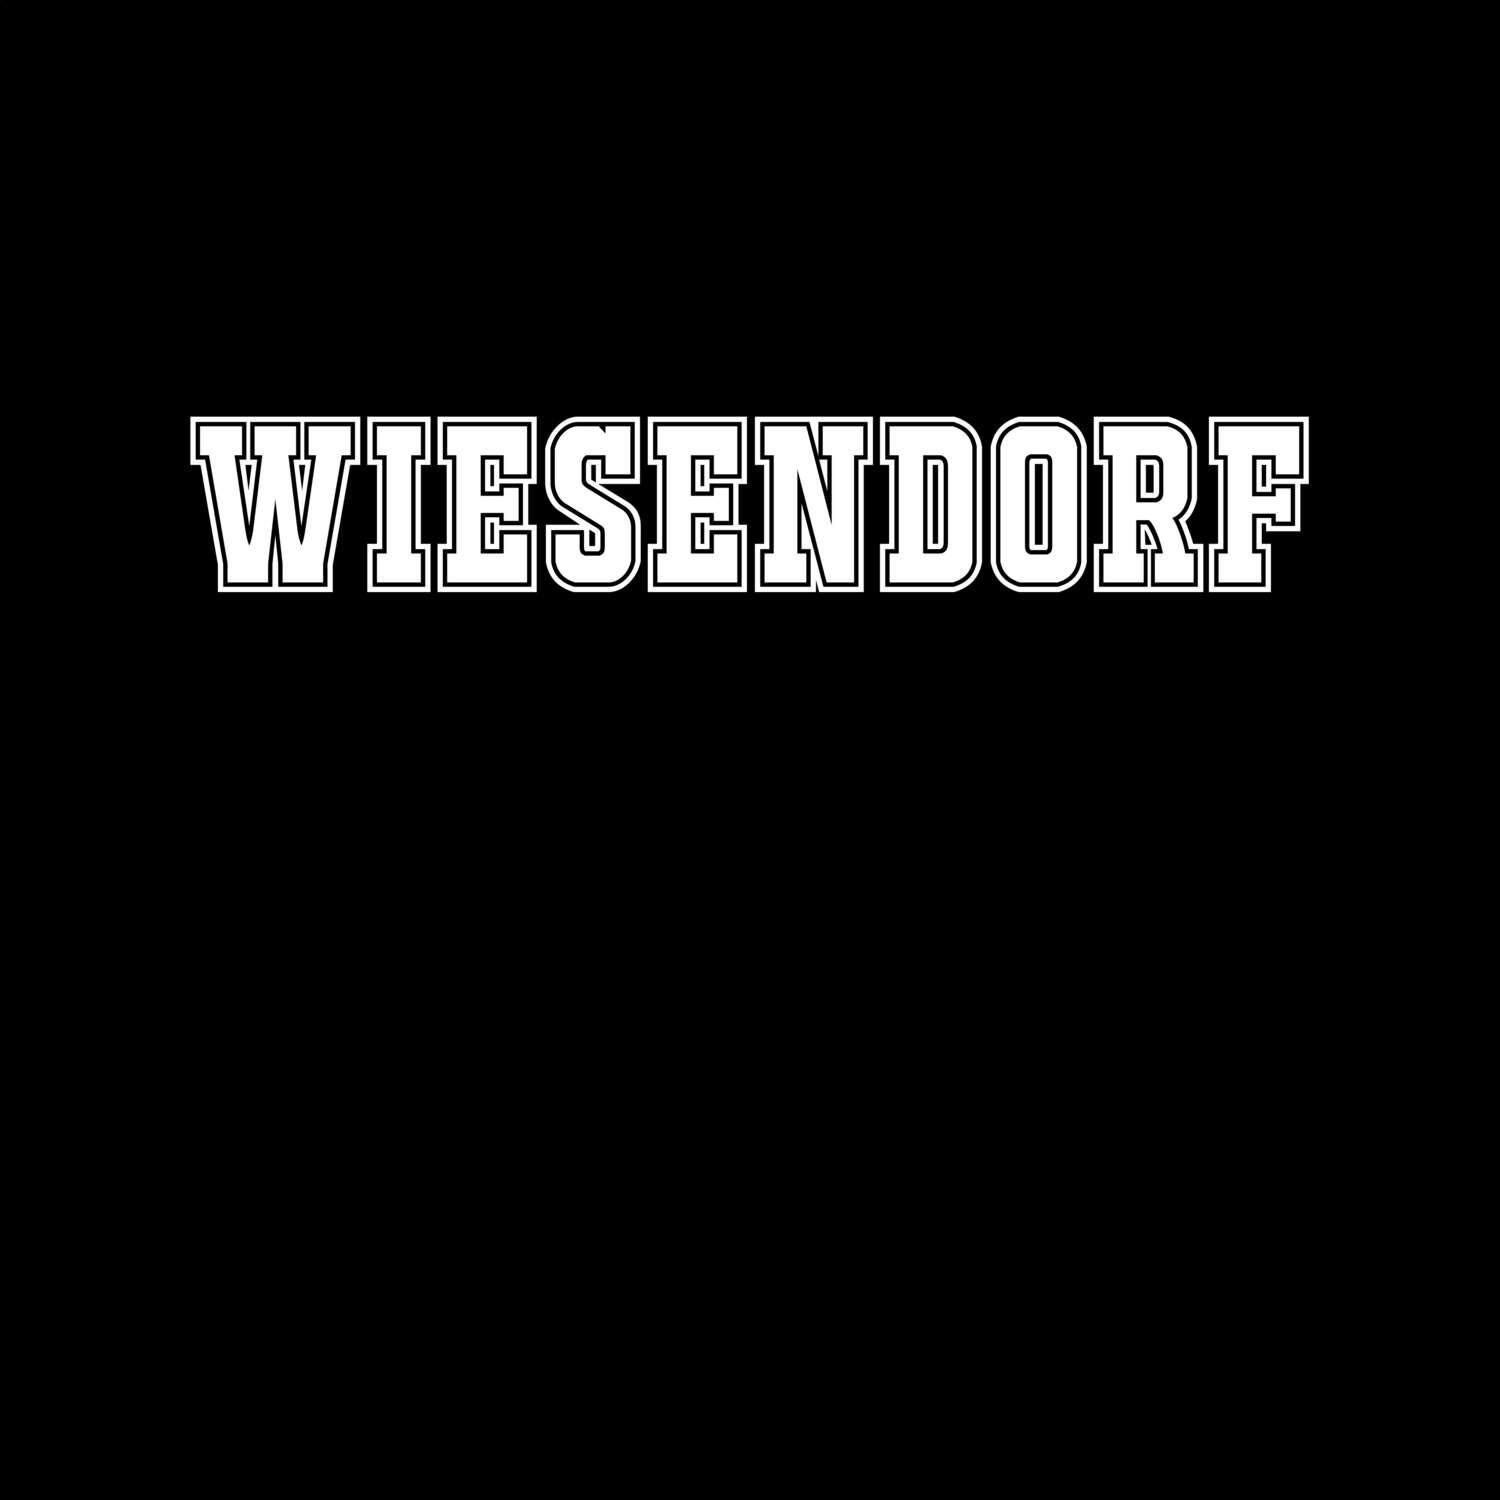 Wiesendorf T-Shirt »Classic«